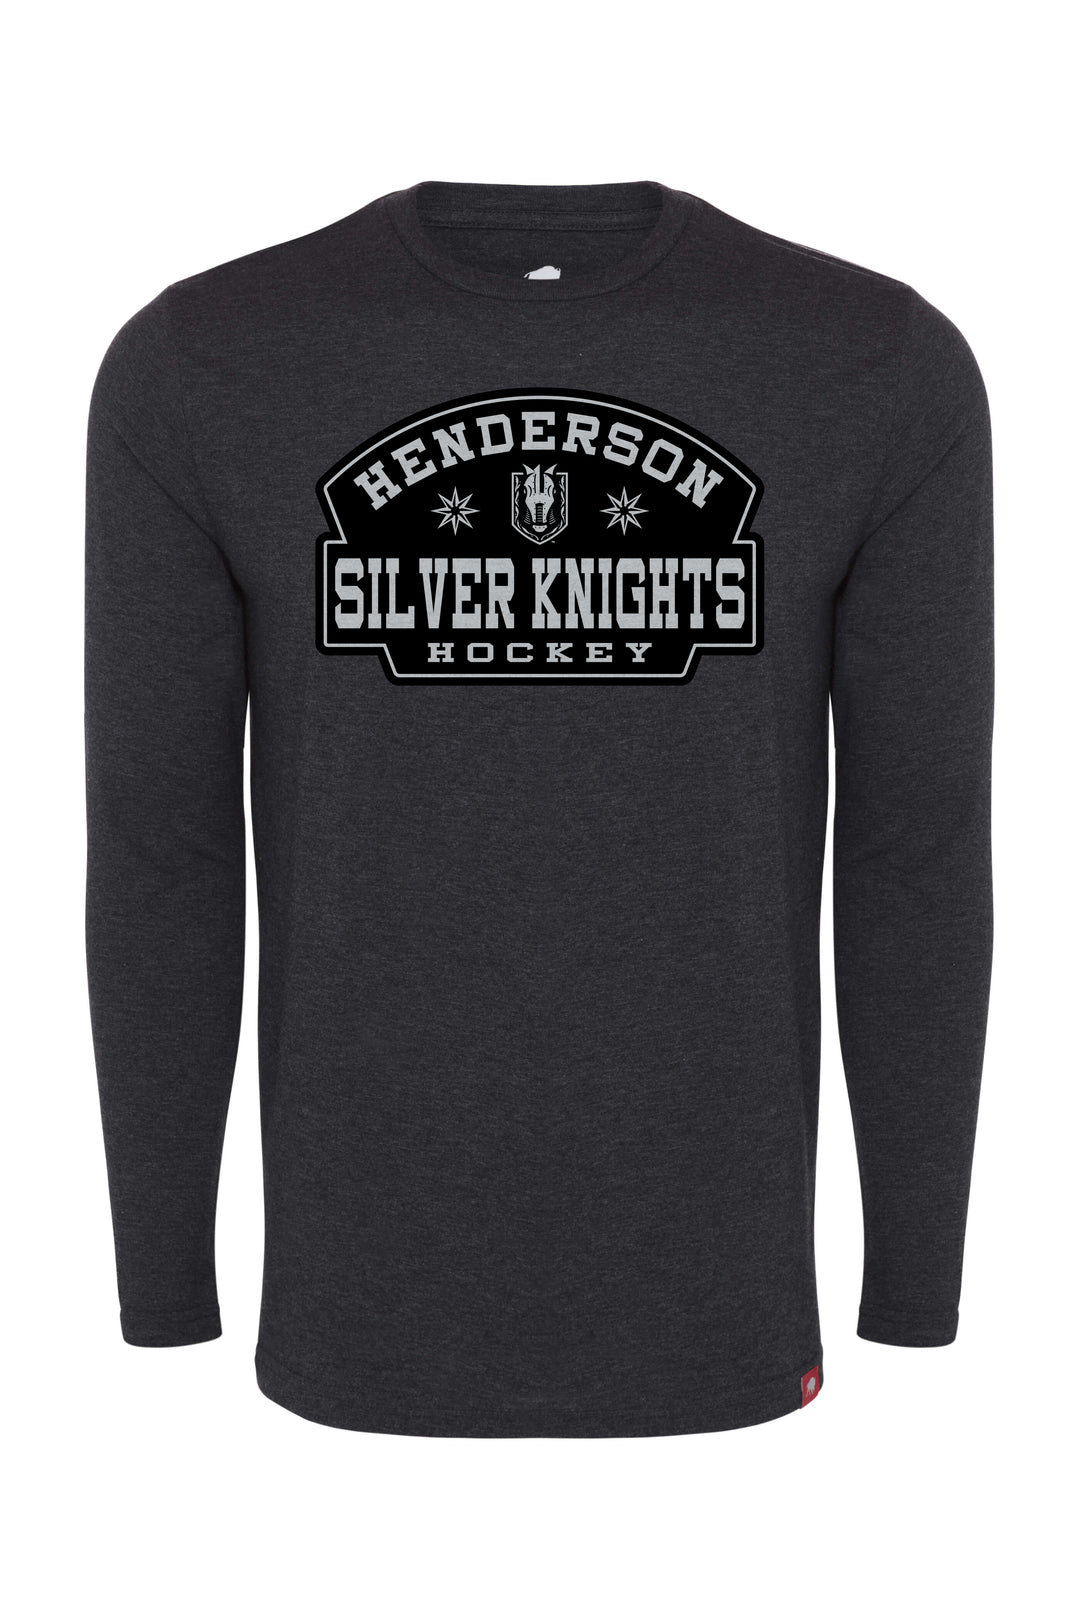 Henderson Silver Knights Long-Sleeve T-Shirt - Vegas Team Store